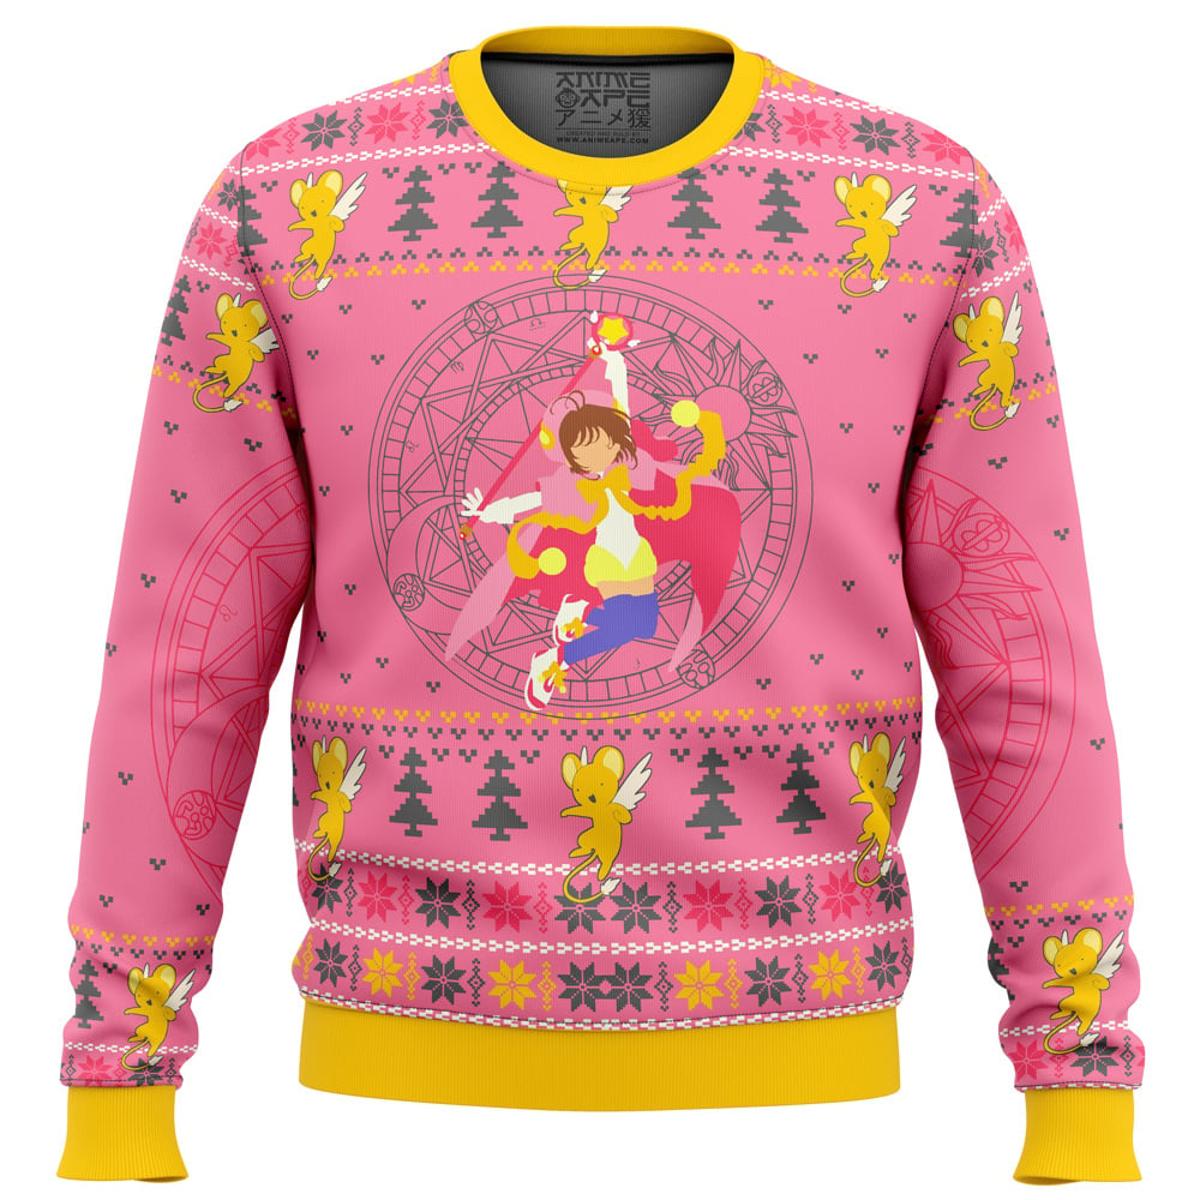 Cardcaptor Sakura Best Ugly Christmas Sweaters